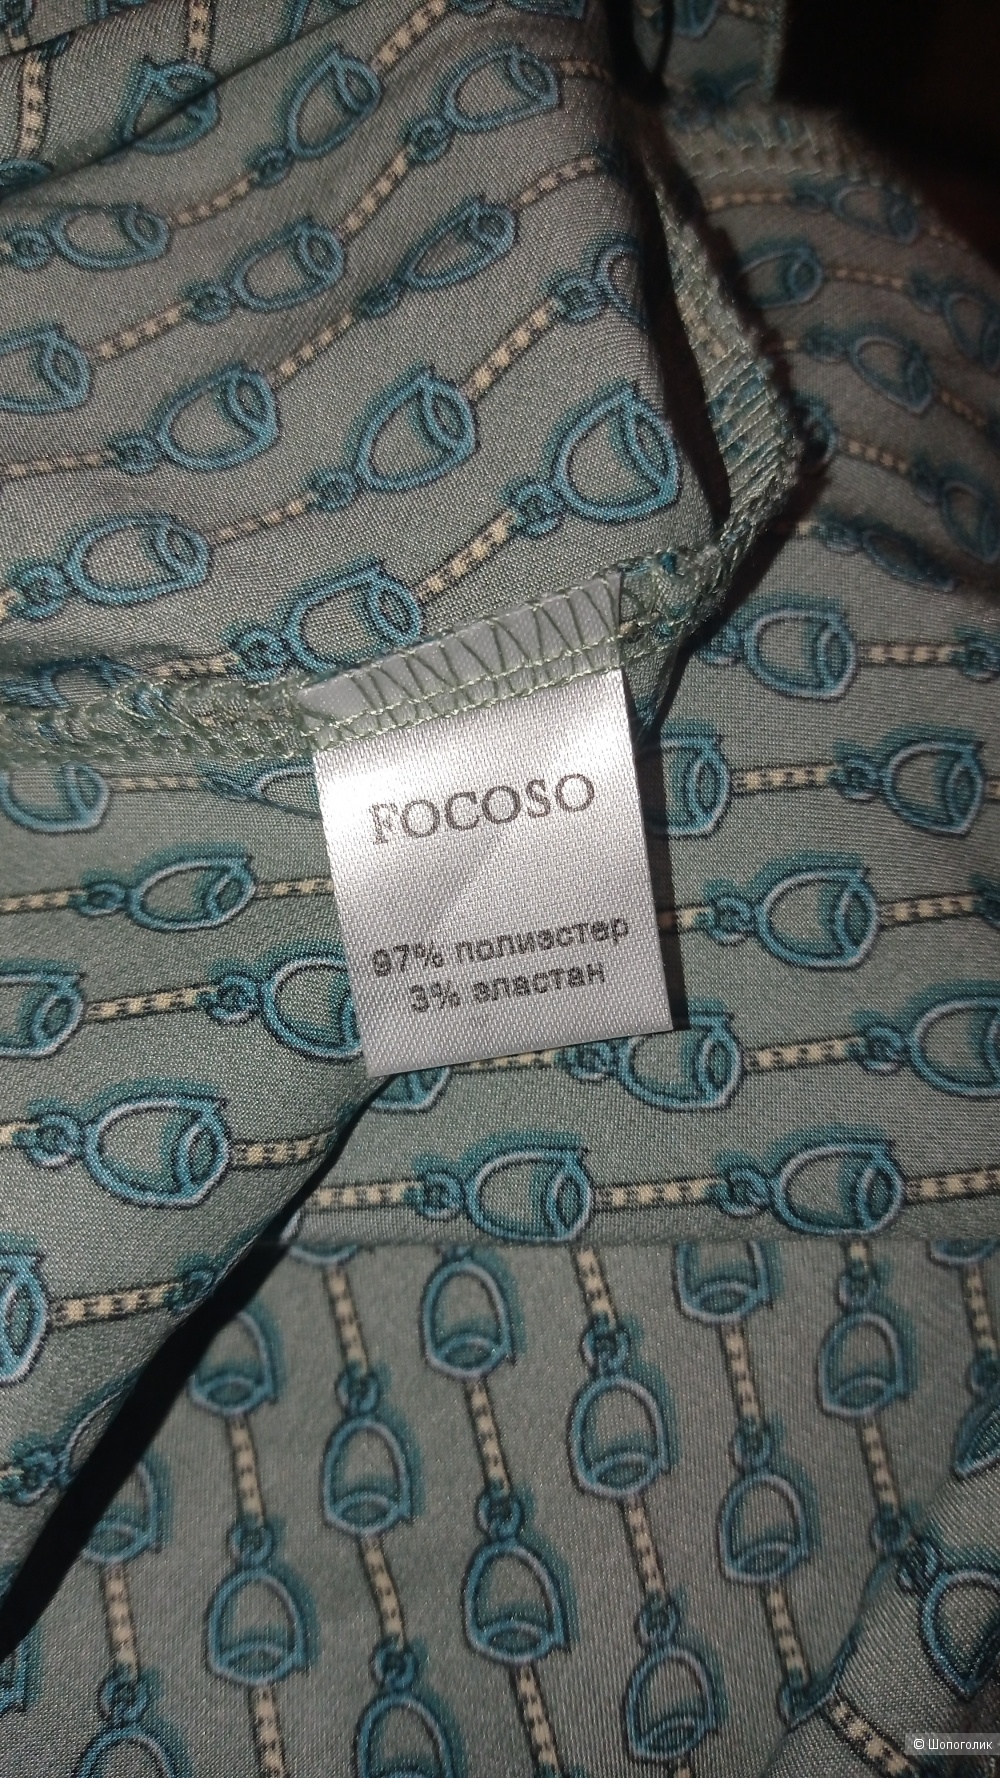 Focoso юбка миди S размер цвет другой